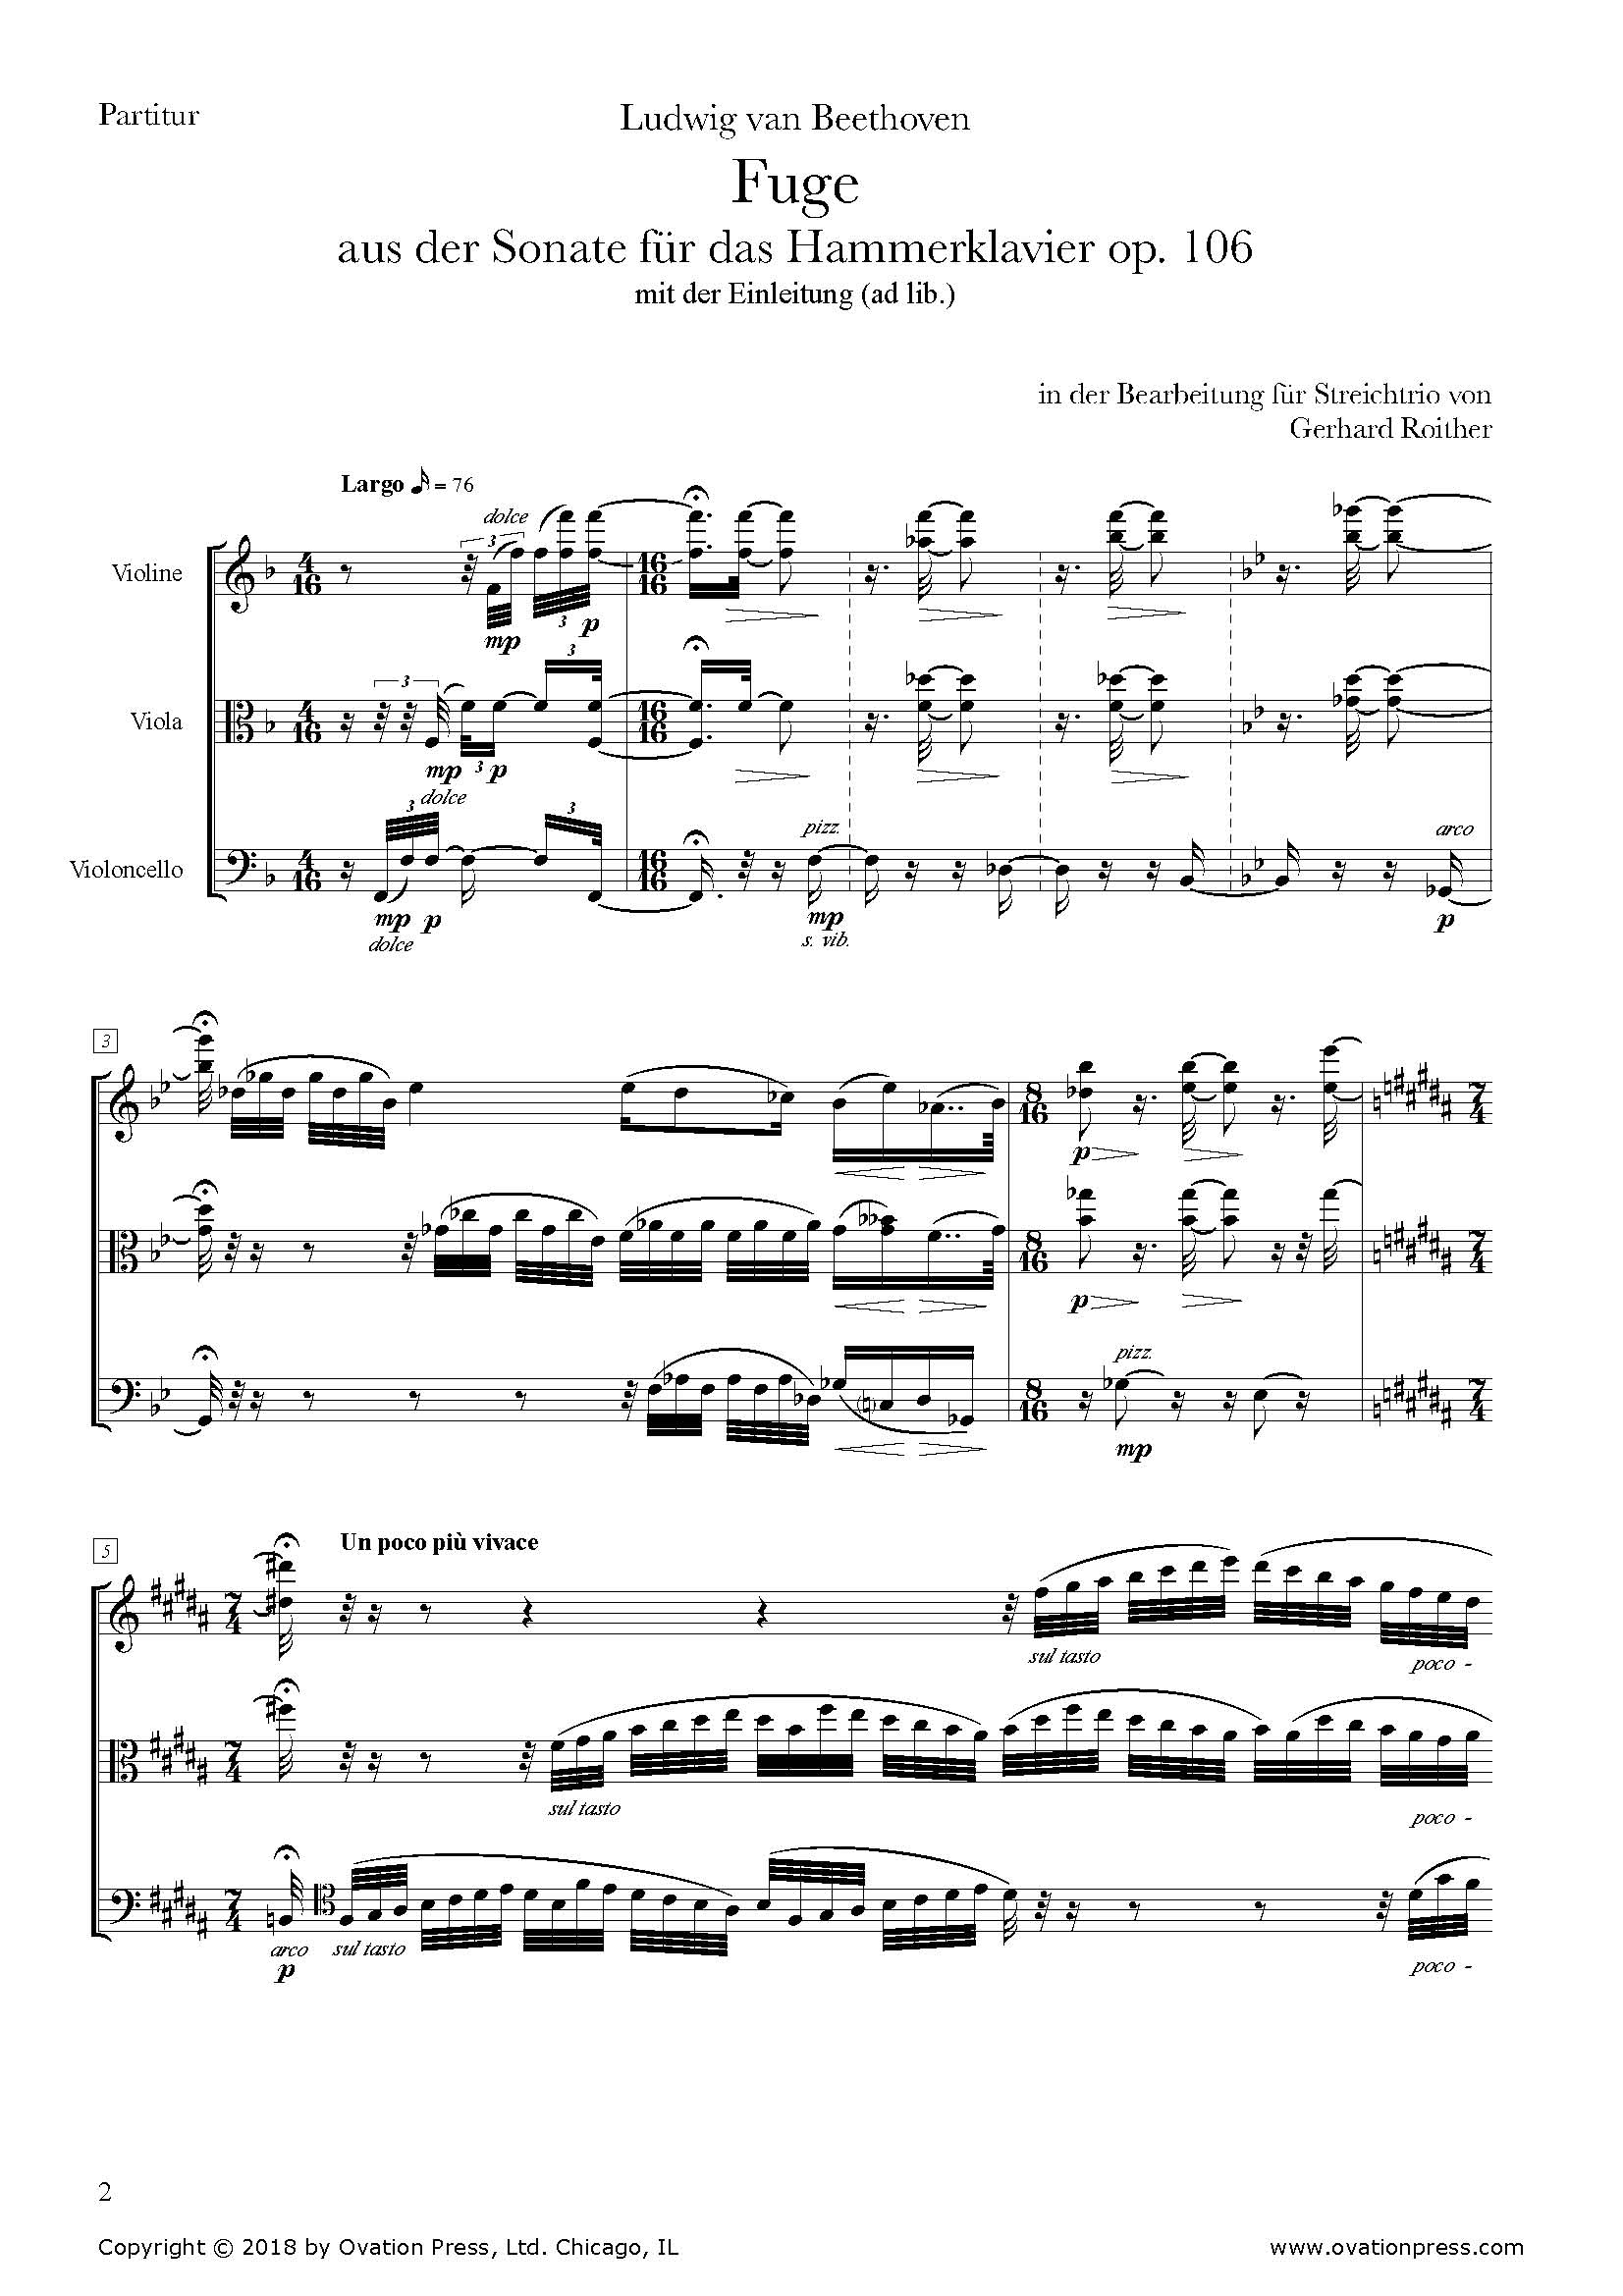 Fugue from Piano Sonata No. 29 "Hammerklavier" for String Trio